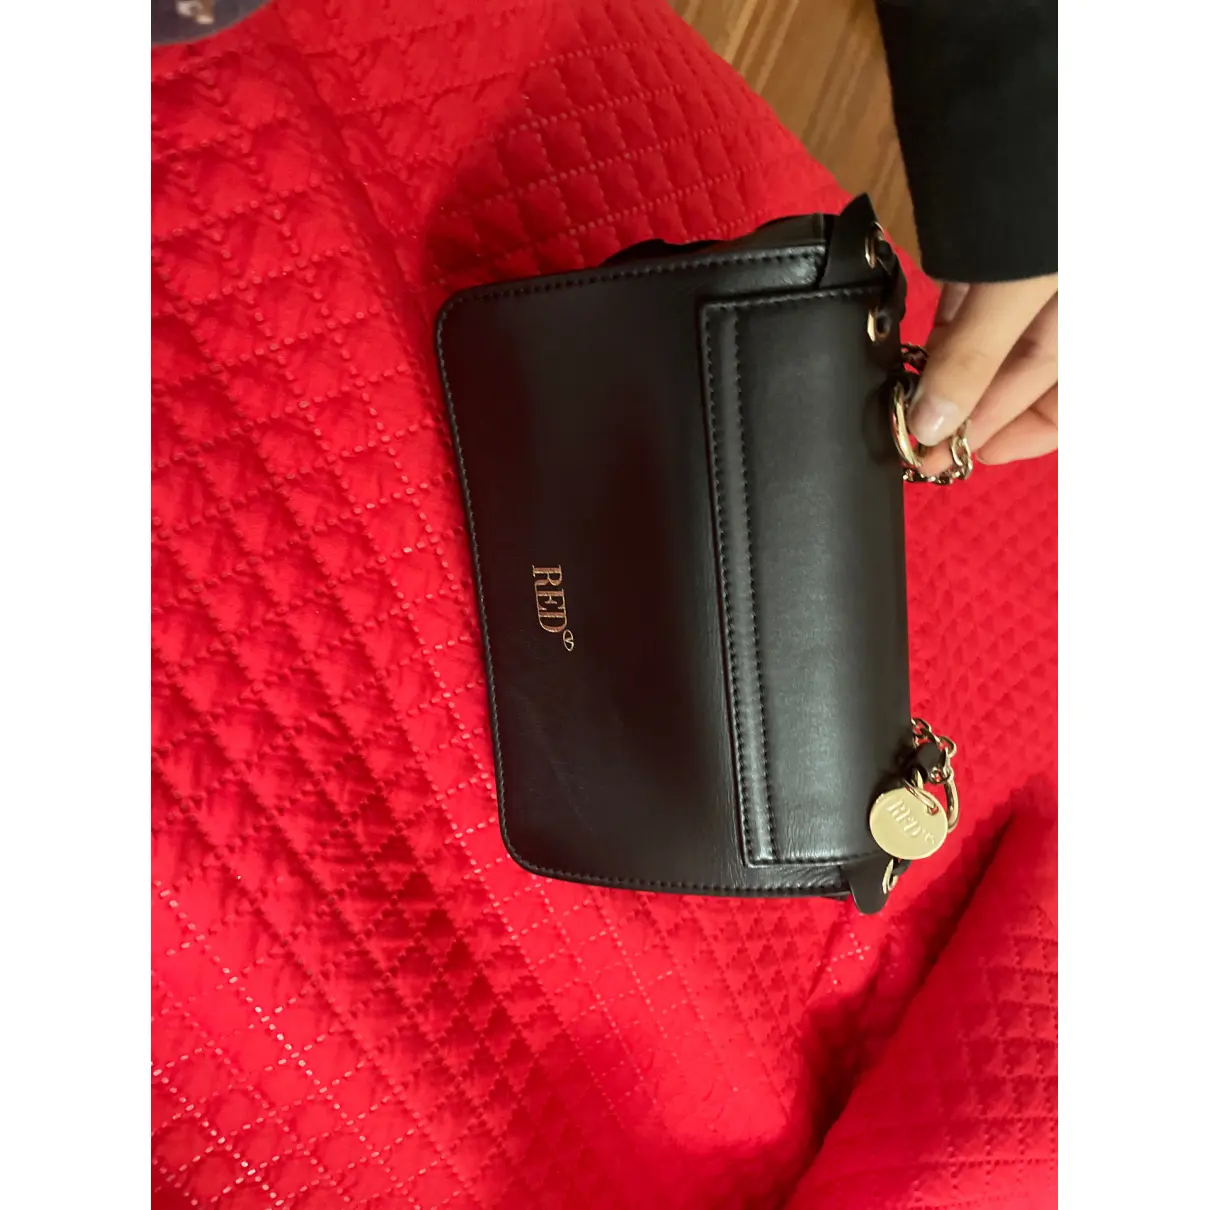 Buy Red Valentino Garavani Leather crossbody bag online